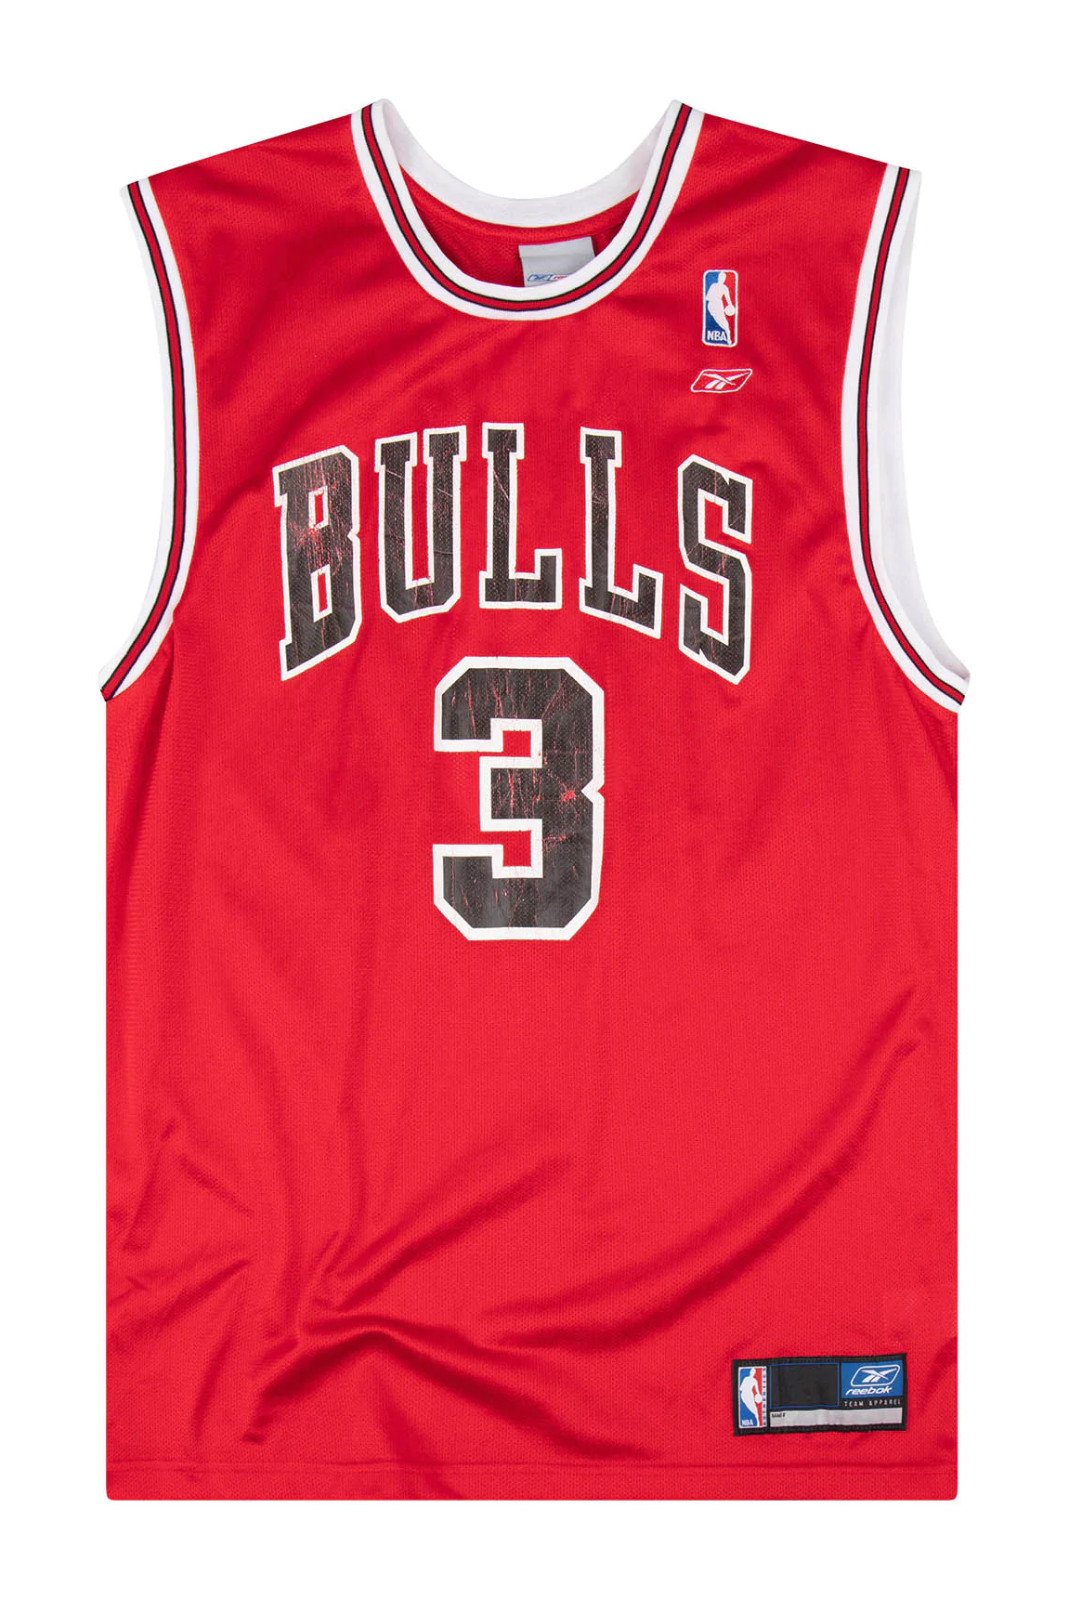 Chicago Bulls 2004-2006 Away Jersey